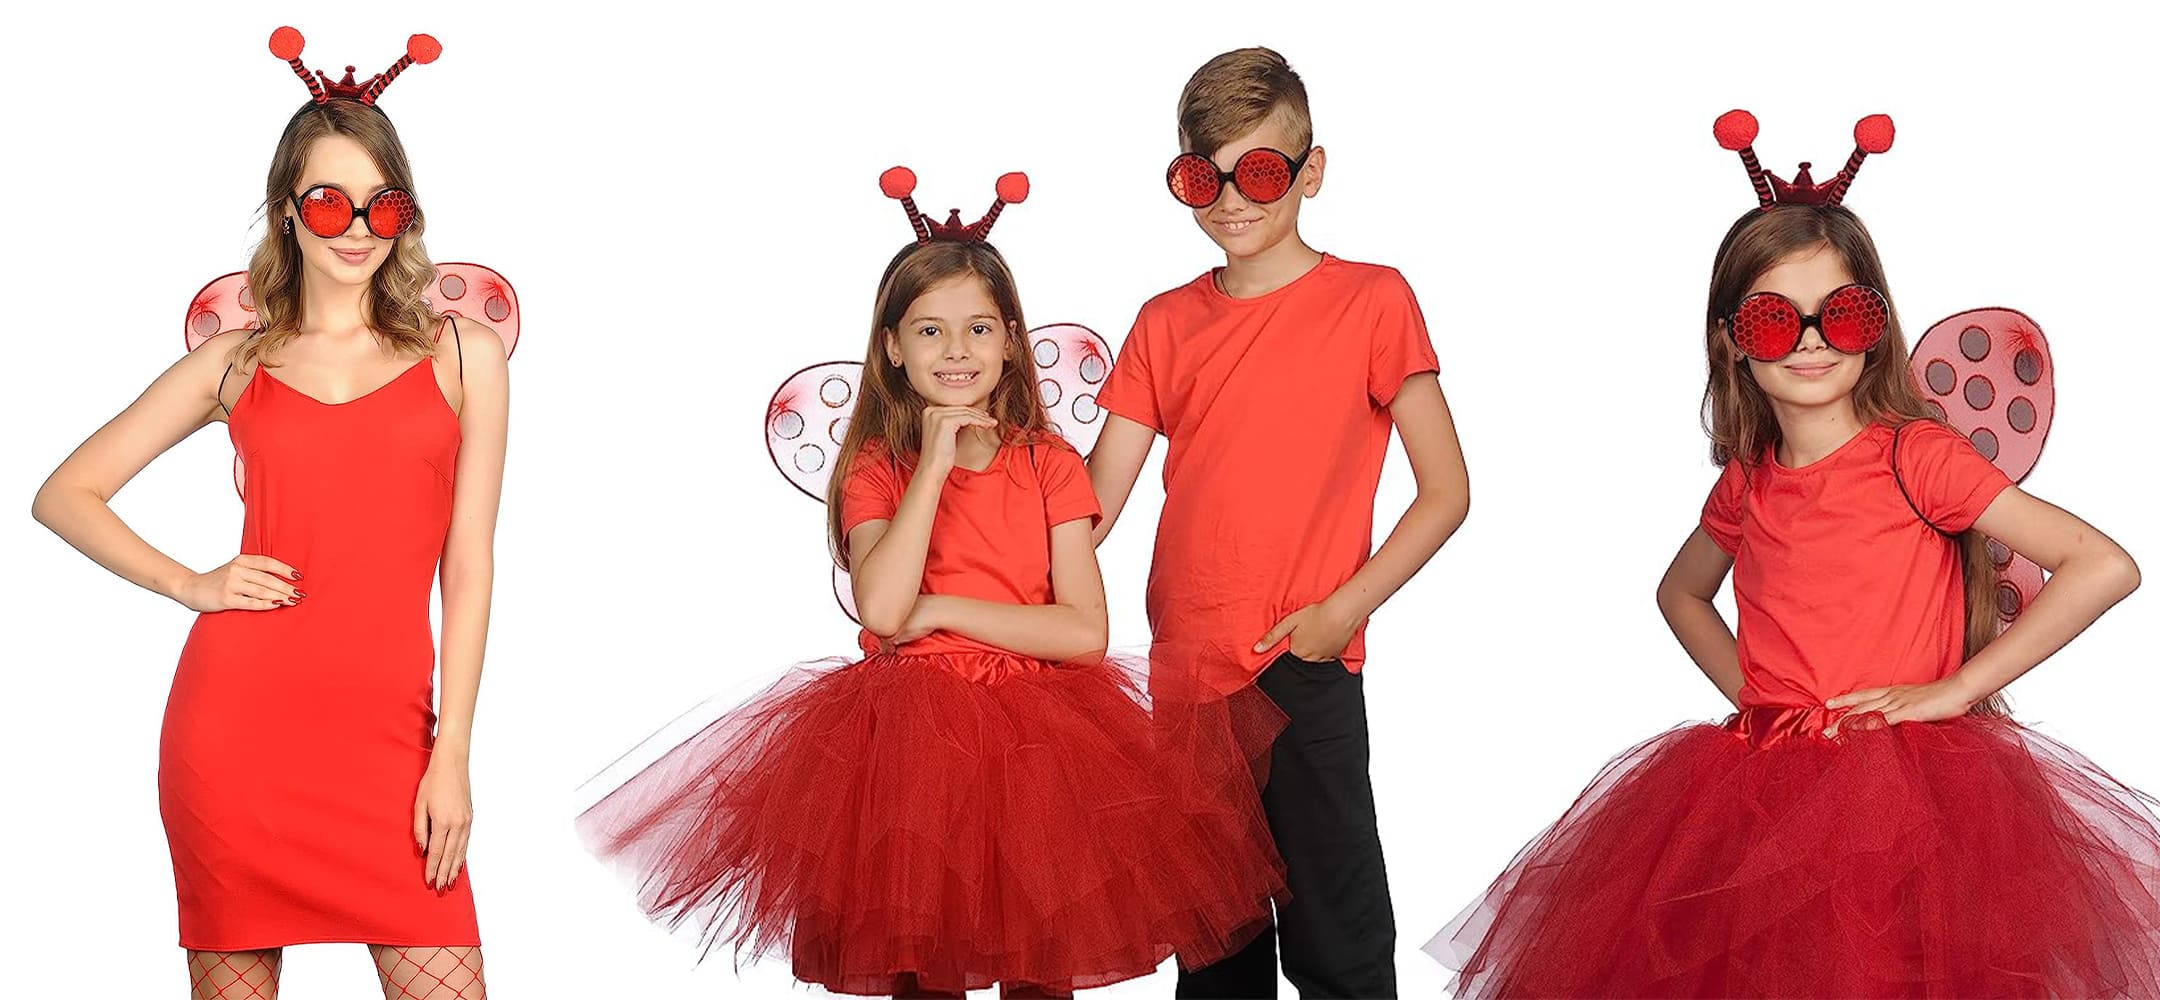 ladybug costume accessories